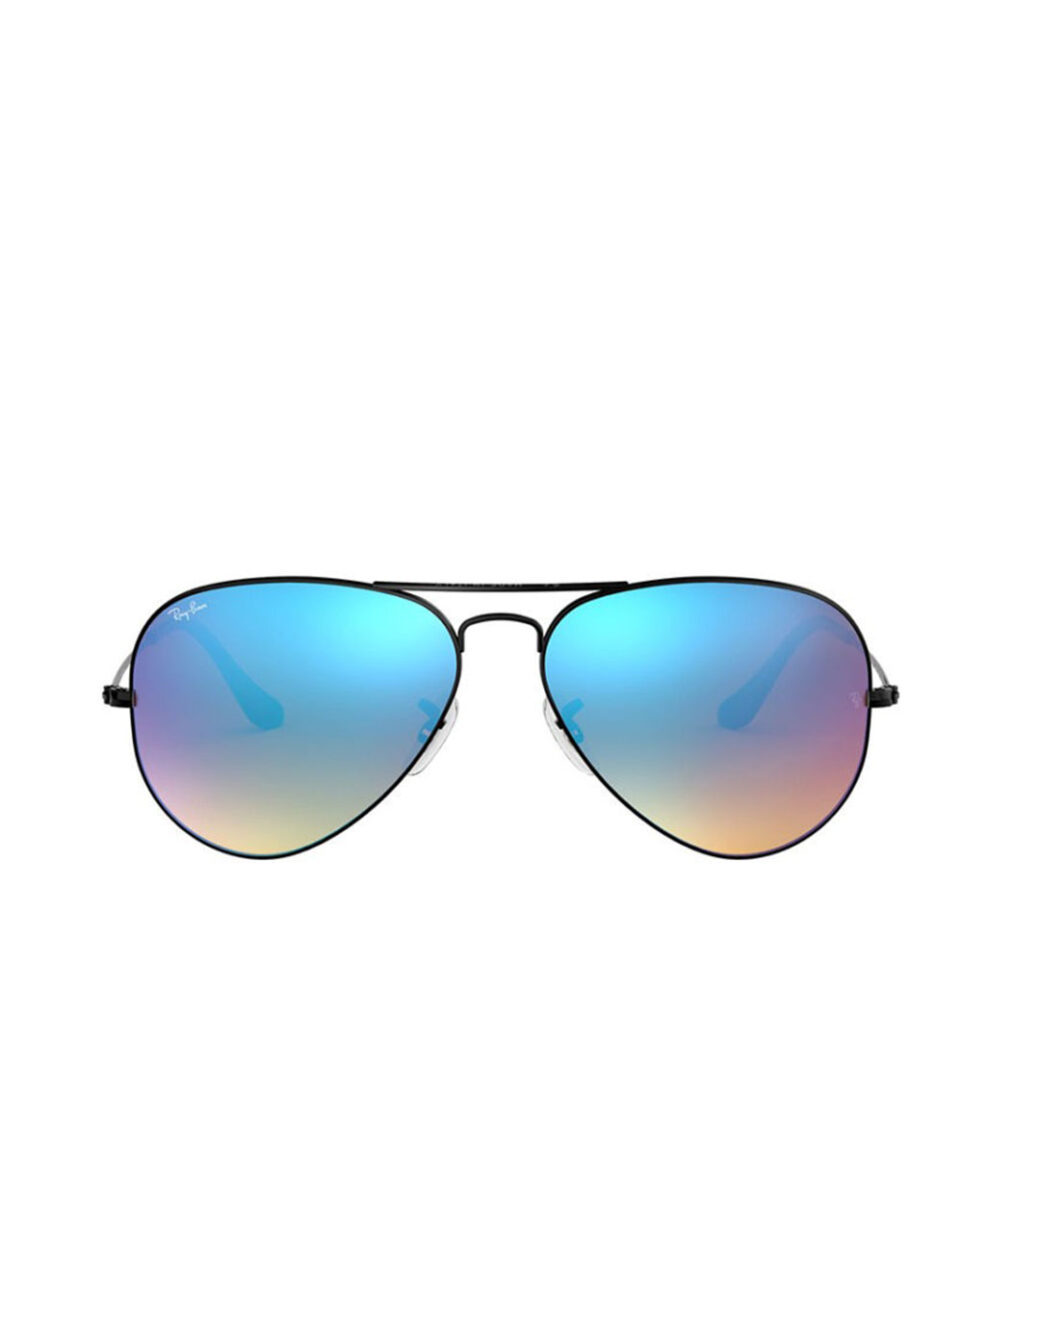 Ray ban Sunglasses - Shop Men Sunglasses from UAE Optics - uaeoptics.com